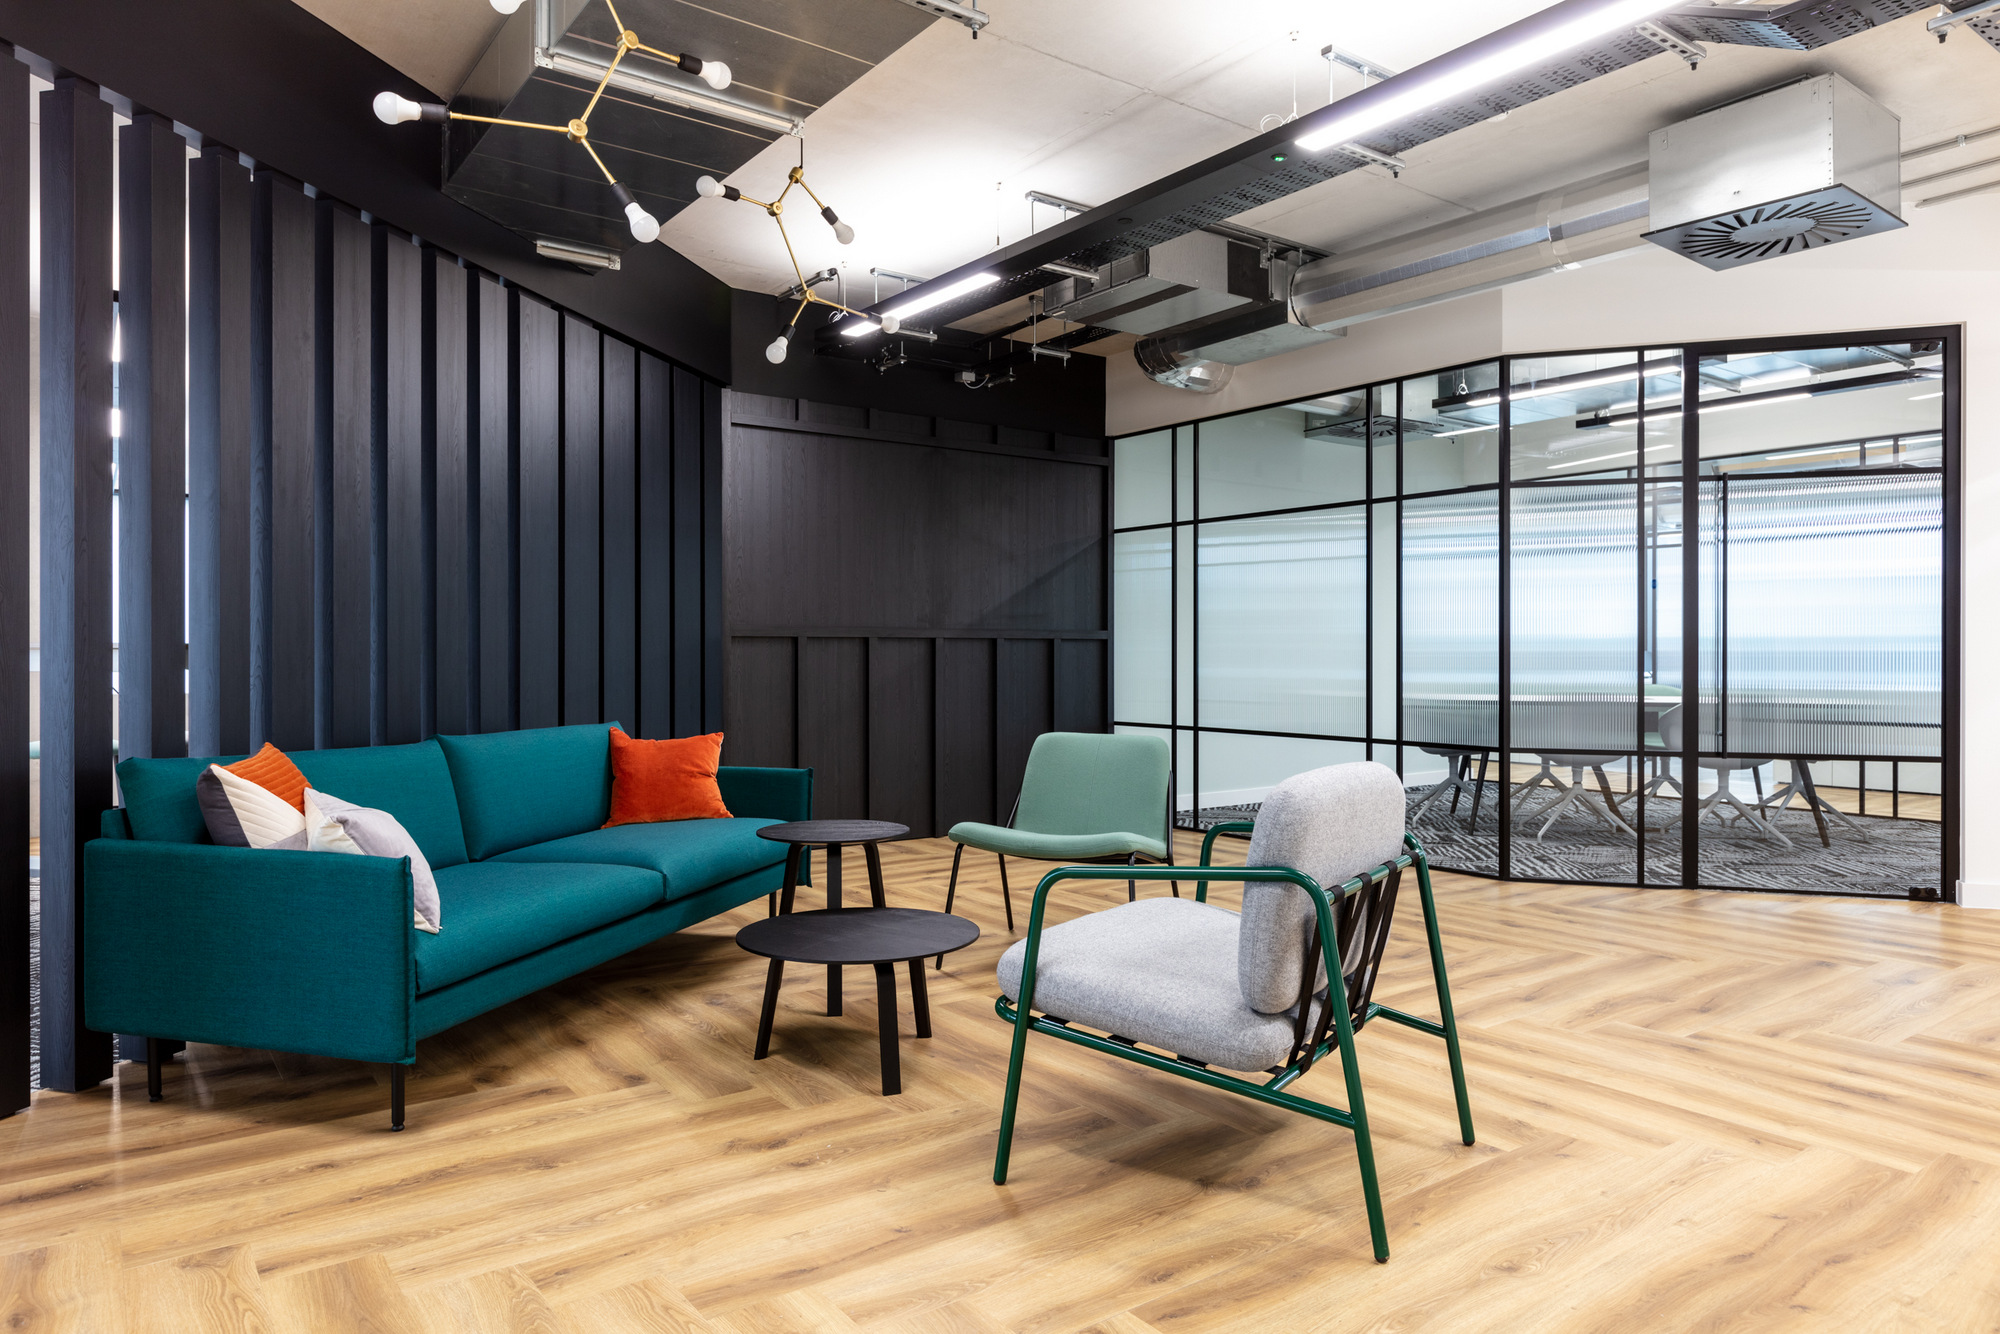 Max Barney房地产办公室——伦敦|ART-Arrakis | 建筑室内设计的创新与灵感